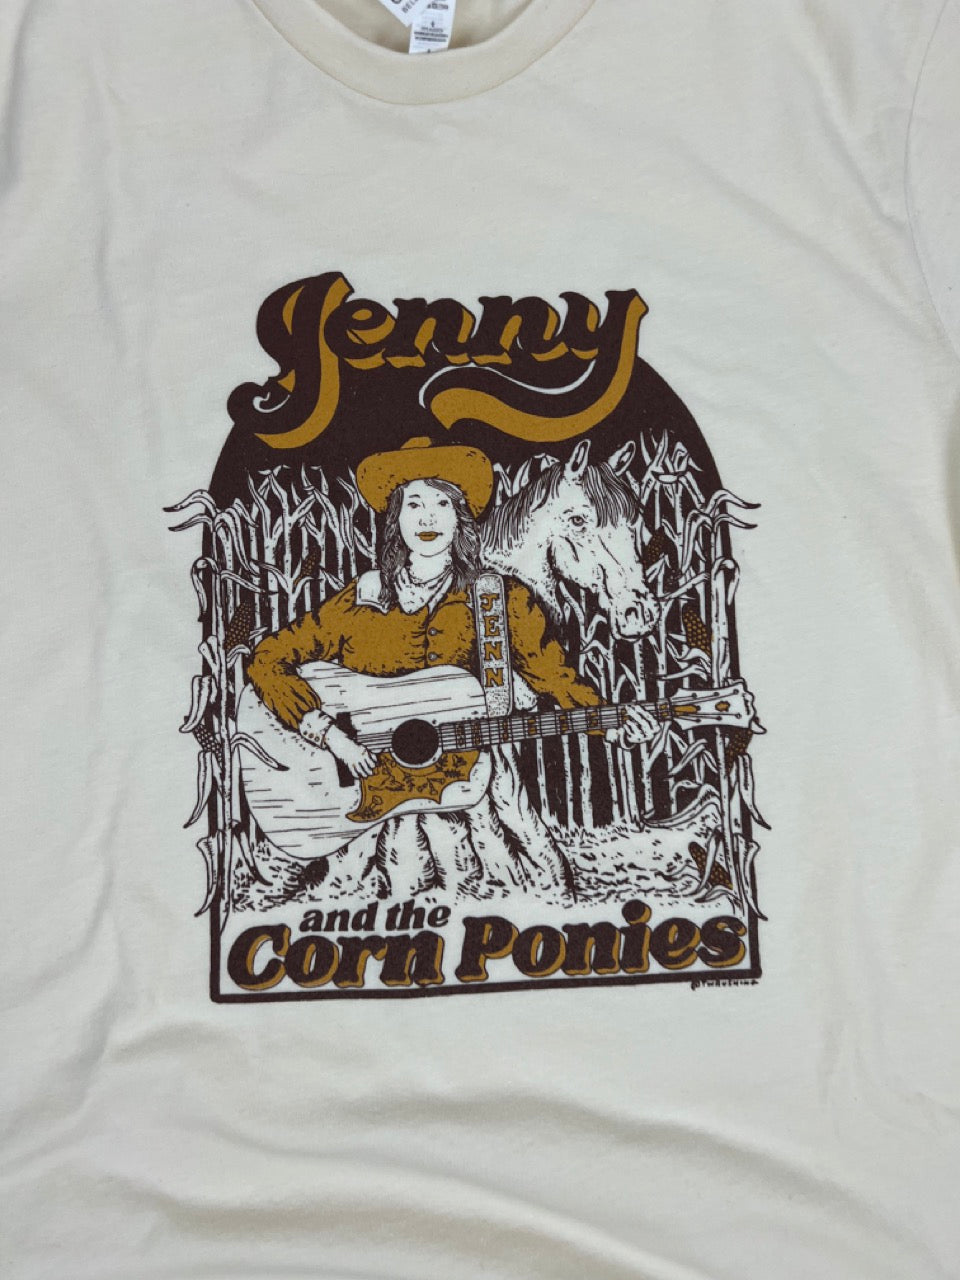 Jenny & the Corn Ponies T-Shirt